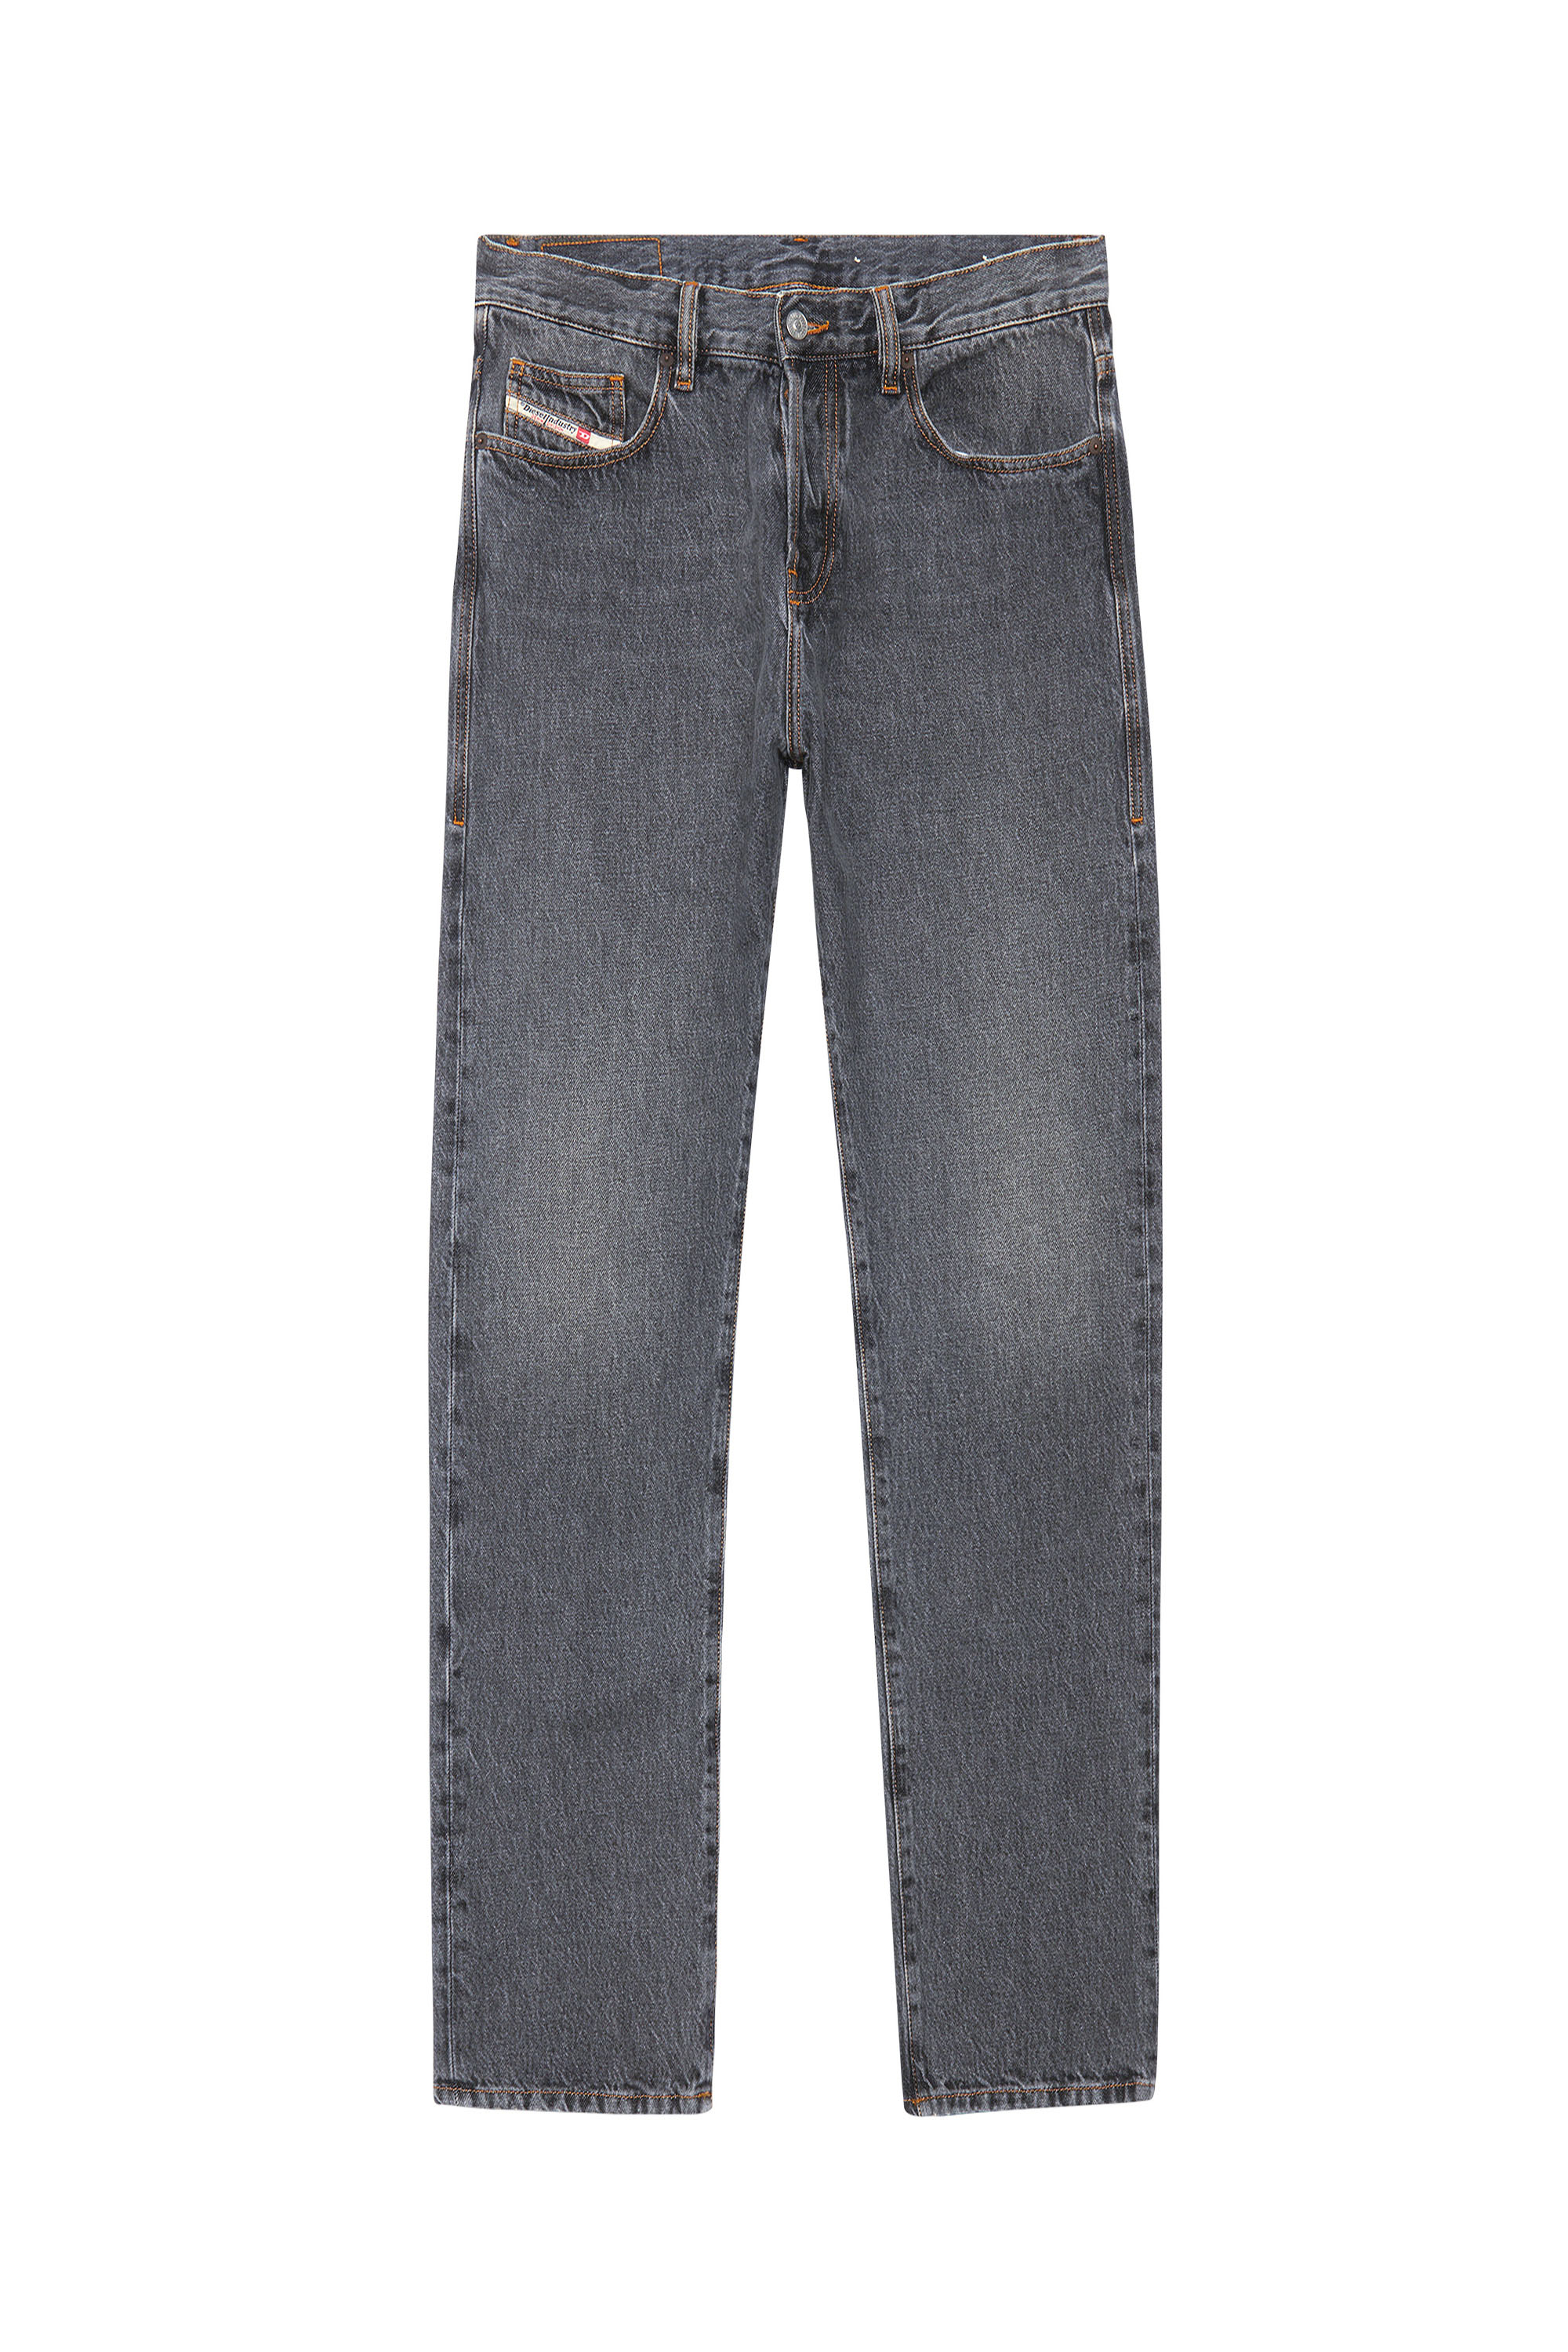 2020 D-Viker 09B84 Straight Jeans, Black/Dark grey - Jeans